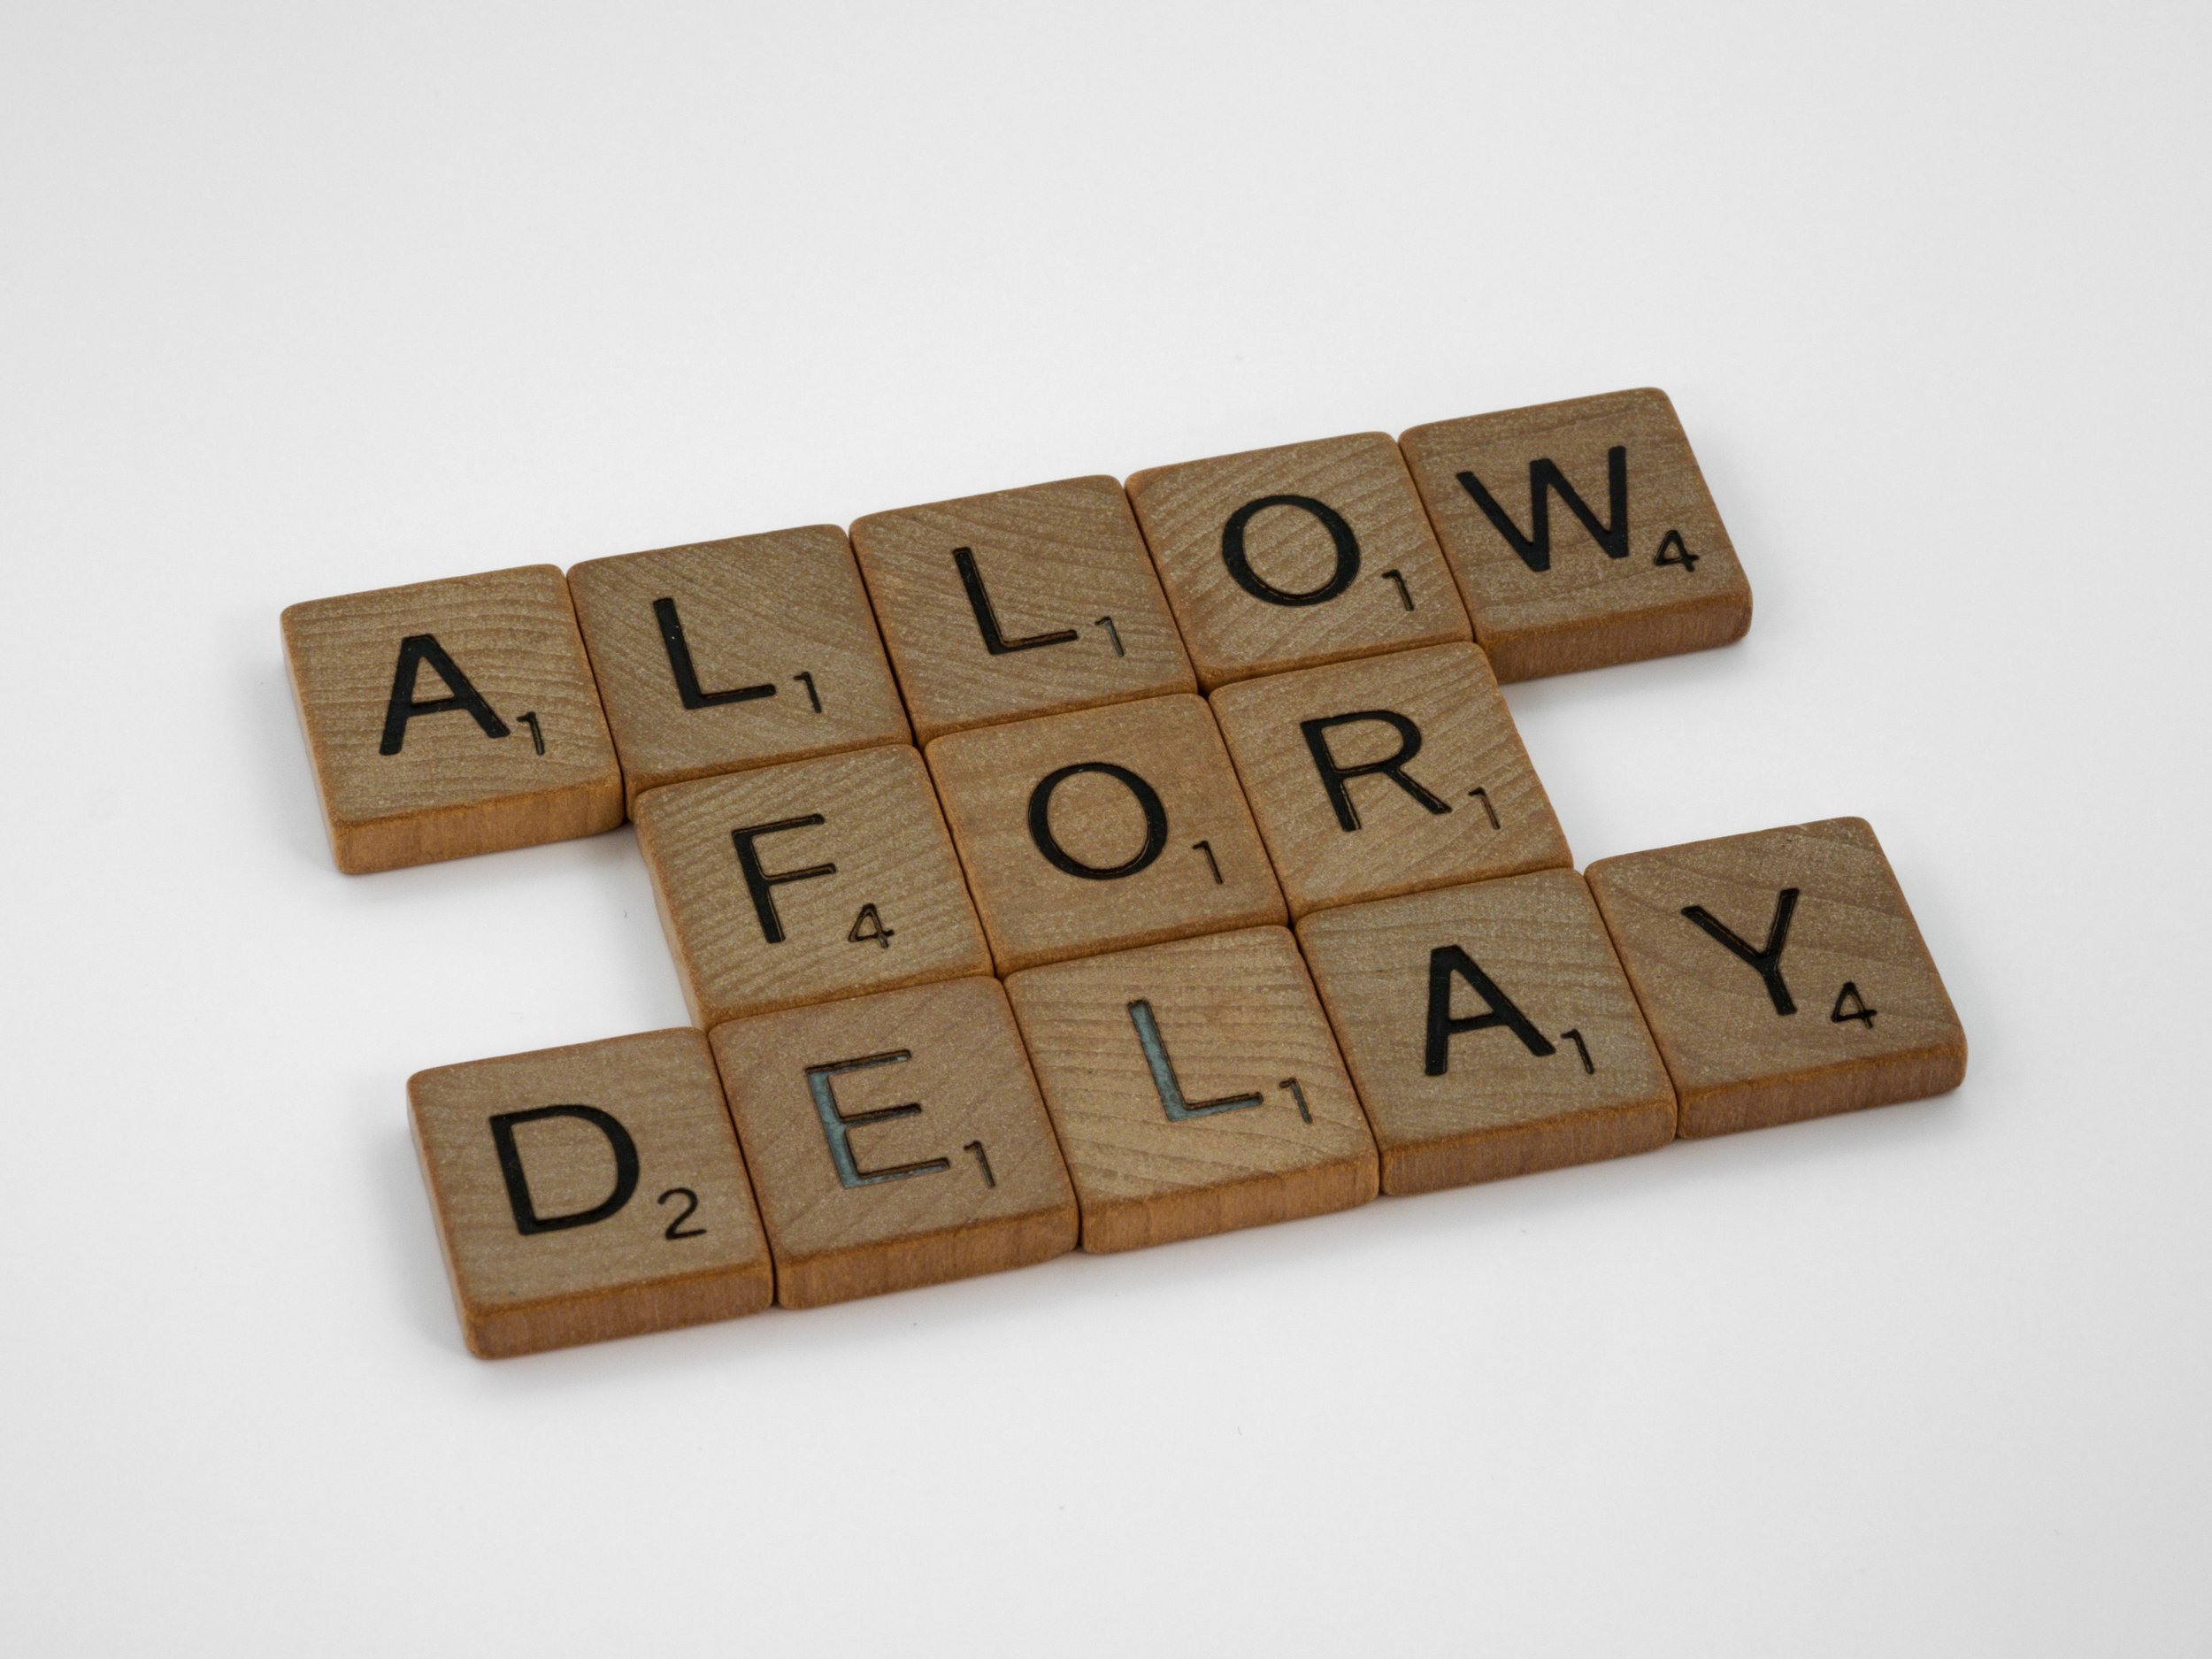 "Allow for Delay" is written in wooden letter tiles.